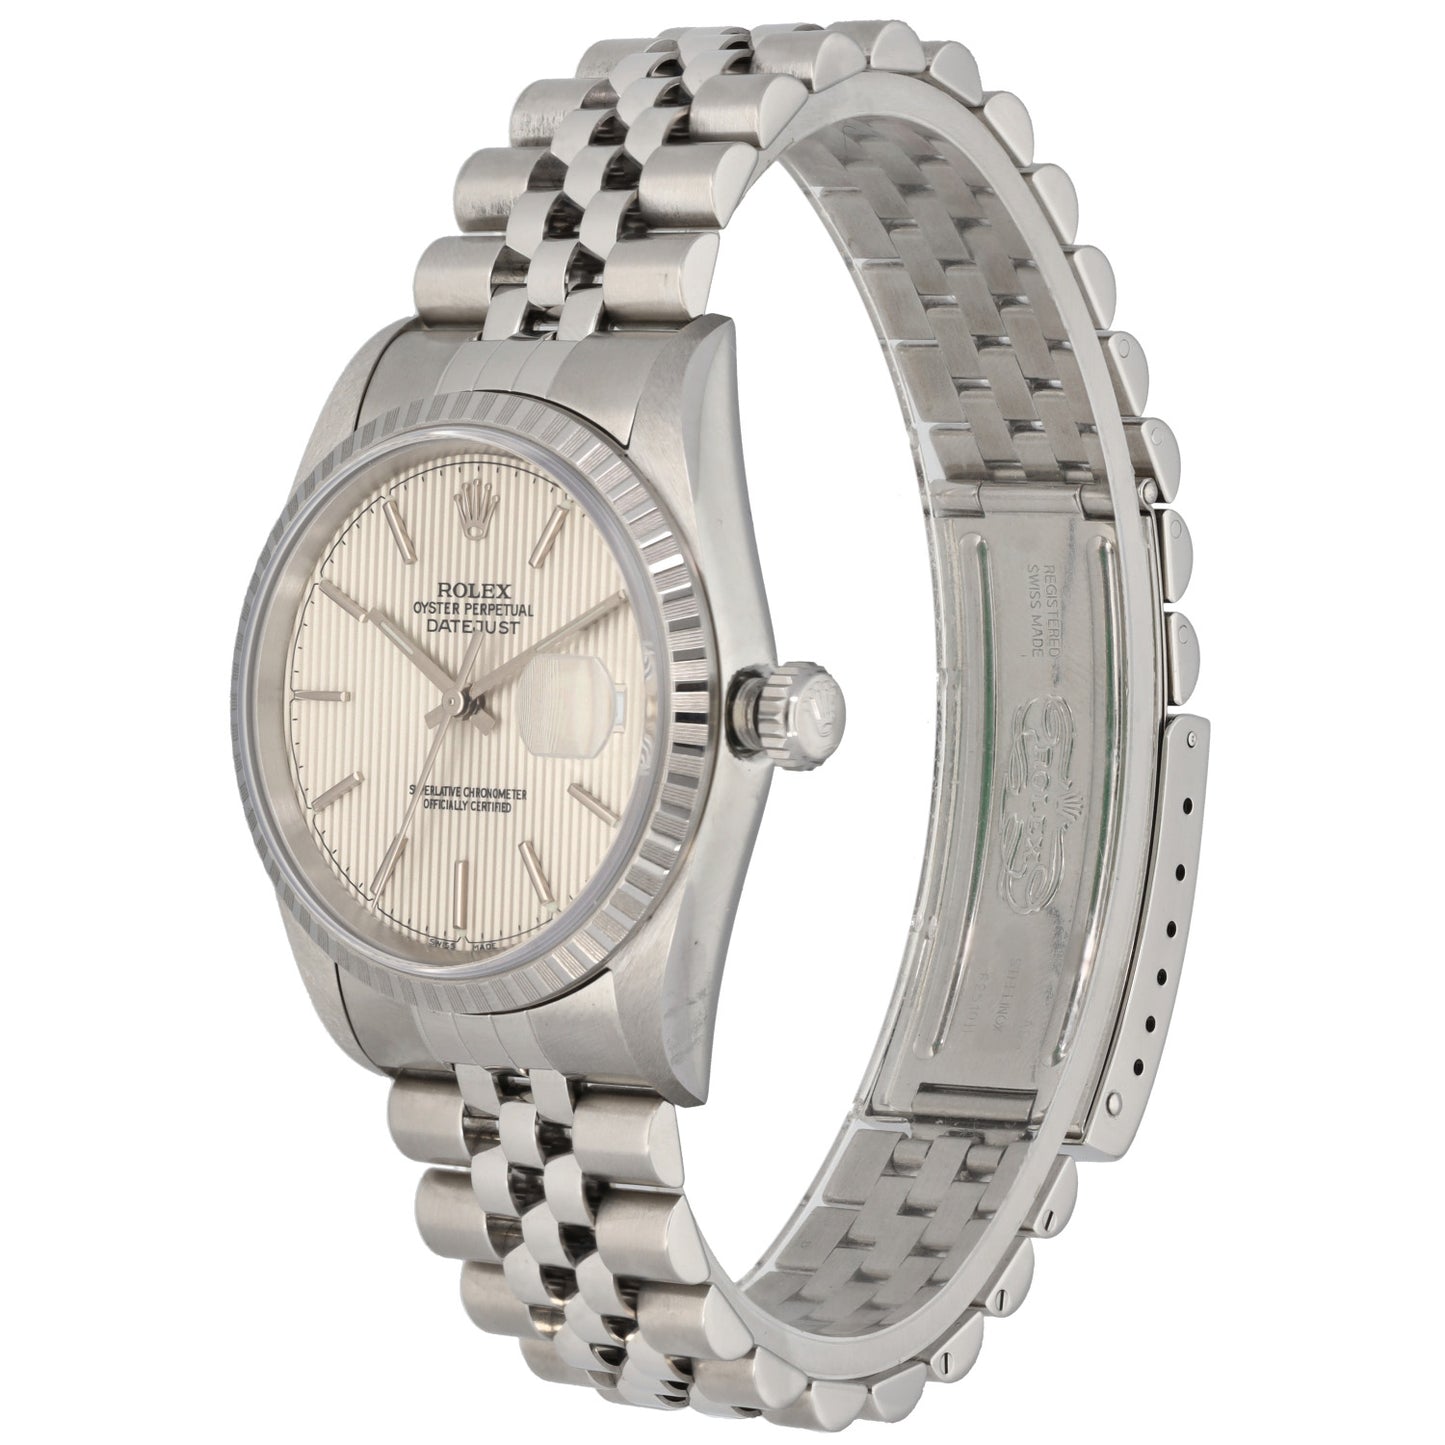 Rolex Datejust 16220 36mm Stainless Steel Watch – H&T